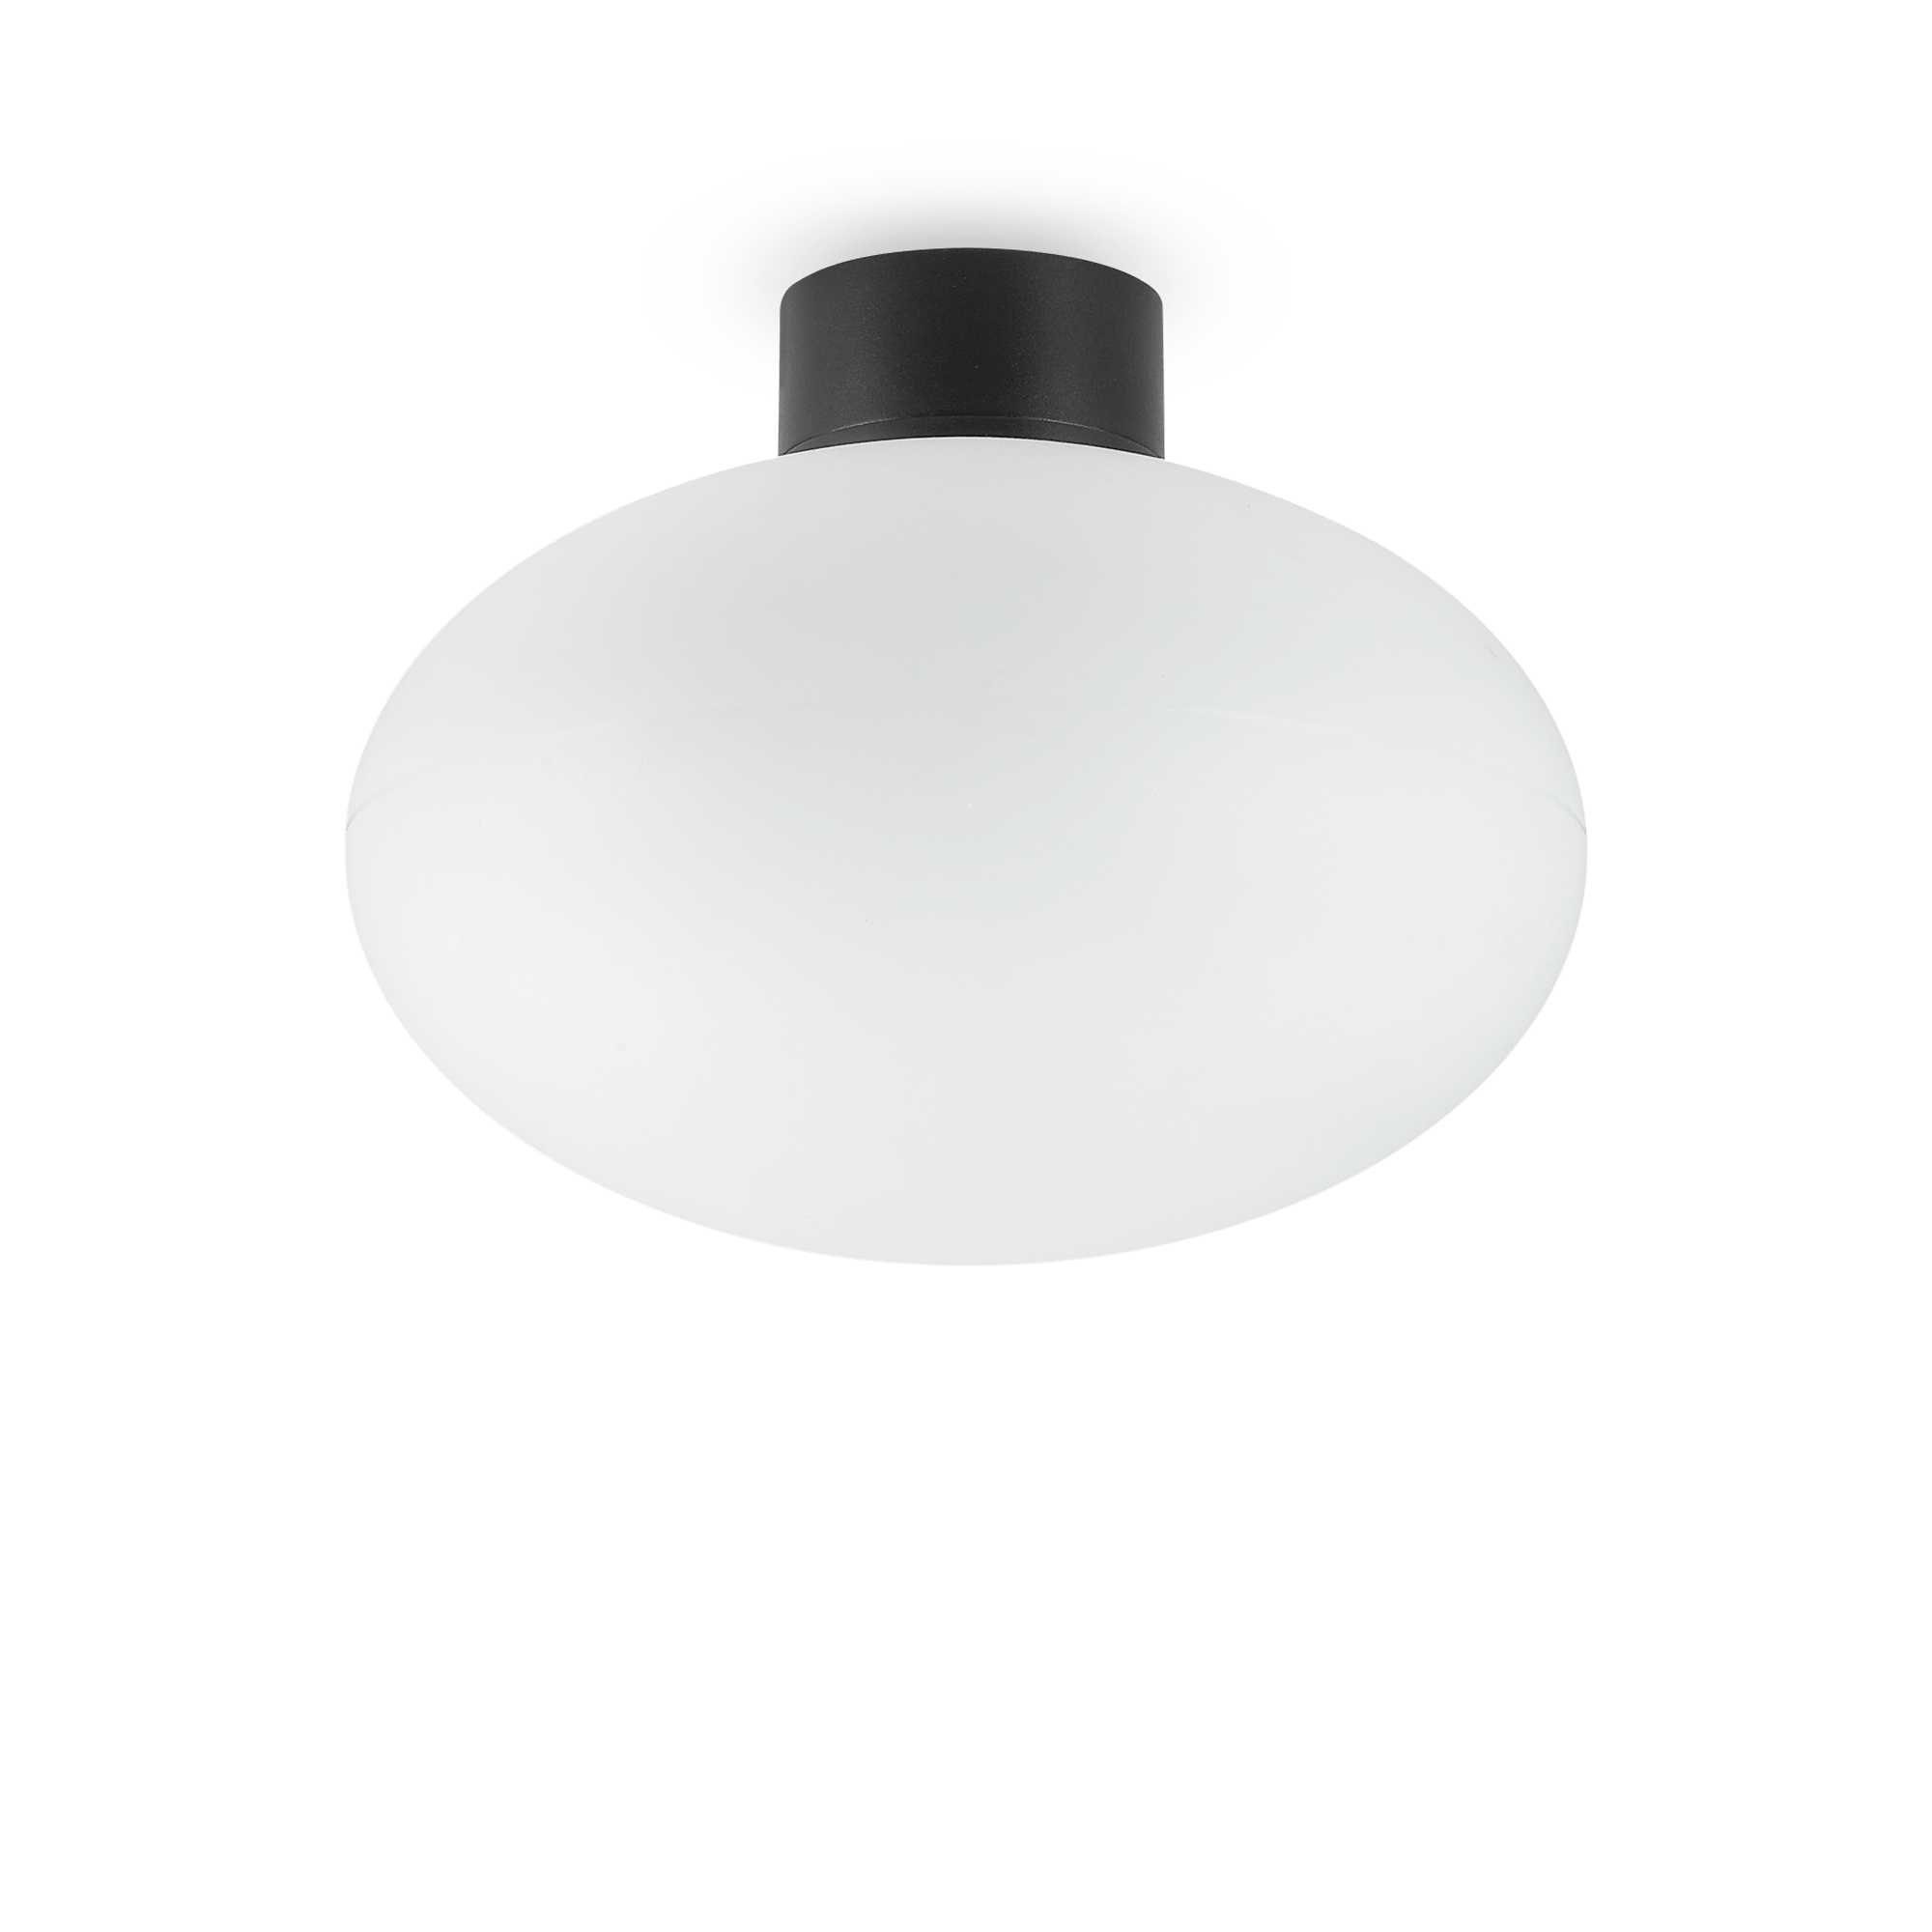 AD hotelska oprema Vanjska stropna lampa Clio mpl1- Crne boje slika proizvoda